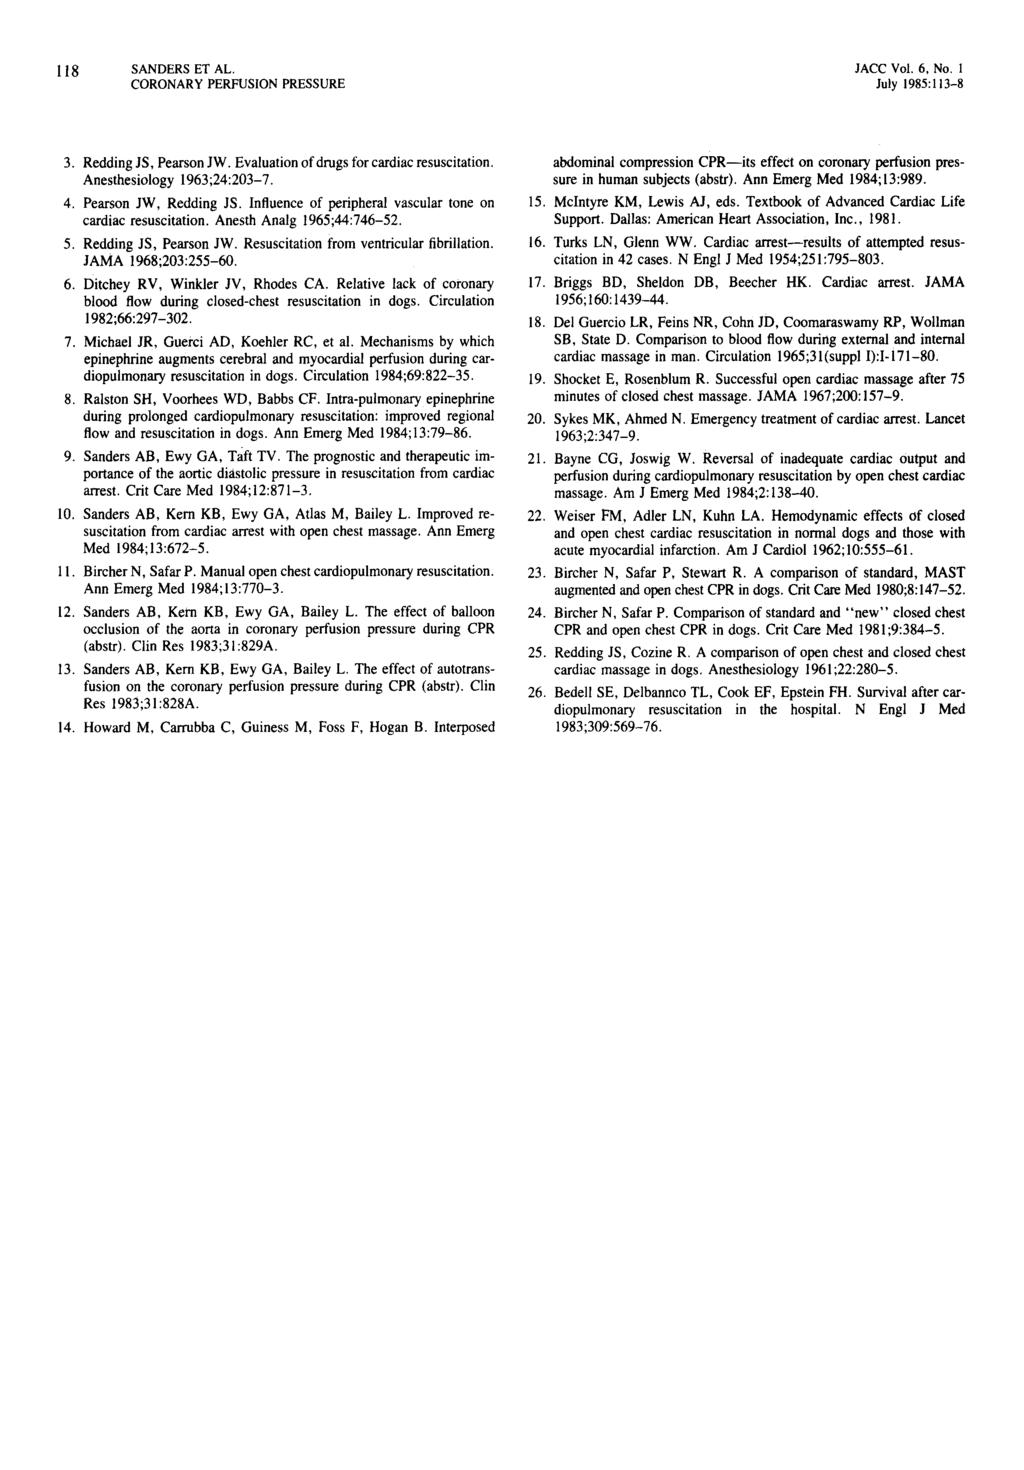 118 SANDERS ET AL. JACC Vol. 6, No. I July 1985:113-8 3. Redding IS, Pearson lw. Evaluation of drugs for cardiac resuscitation. Anesthesiology 1963;24:203-7. 4. Pearson lw, Redding IS.